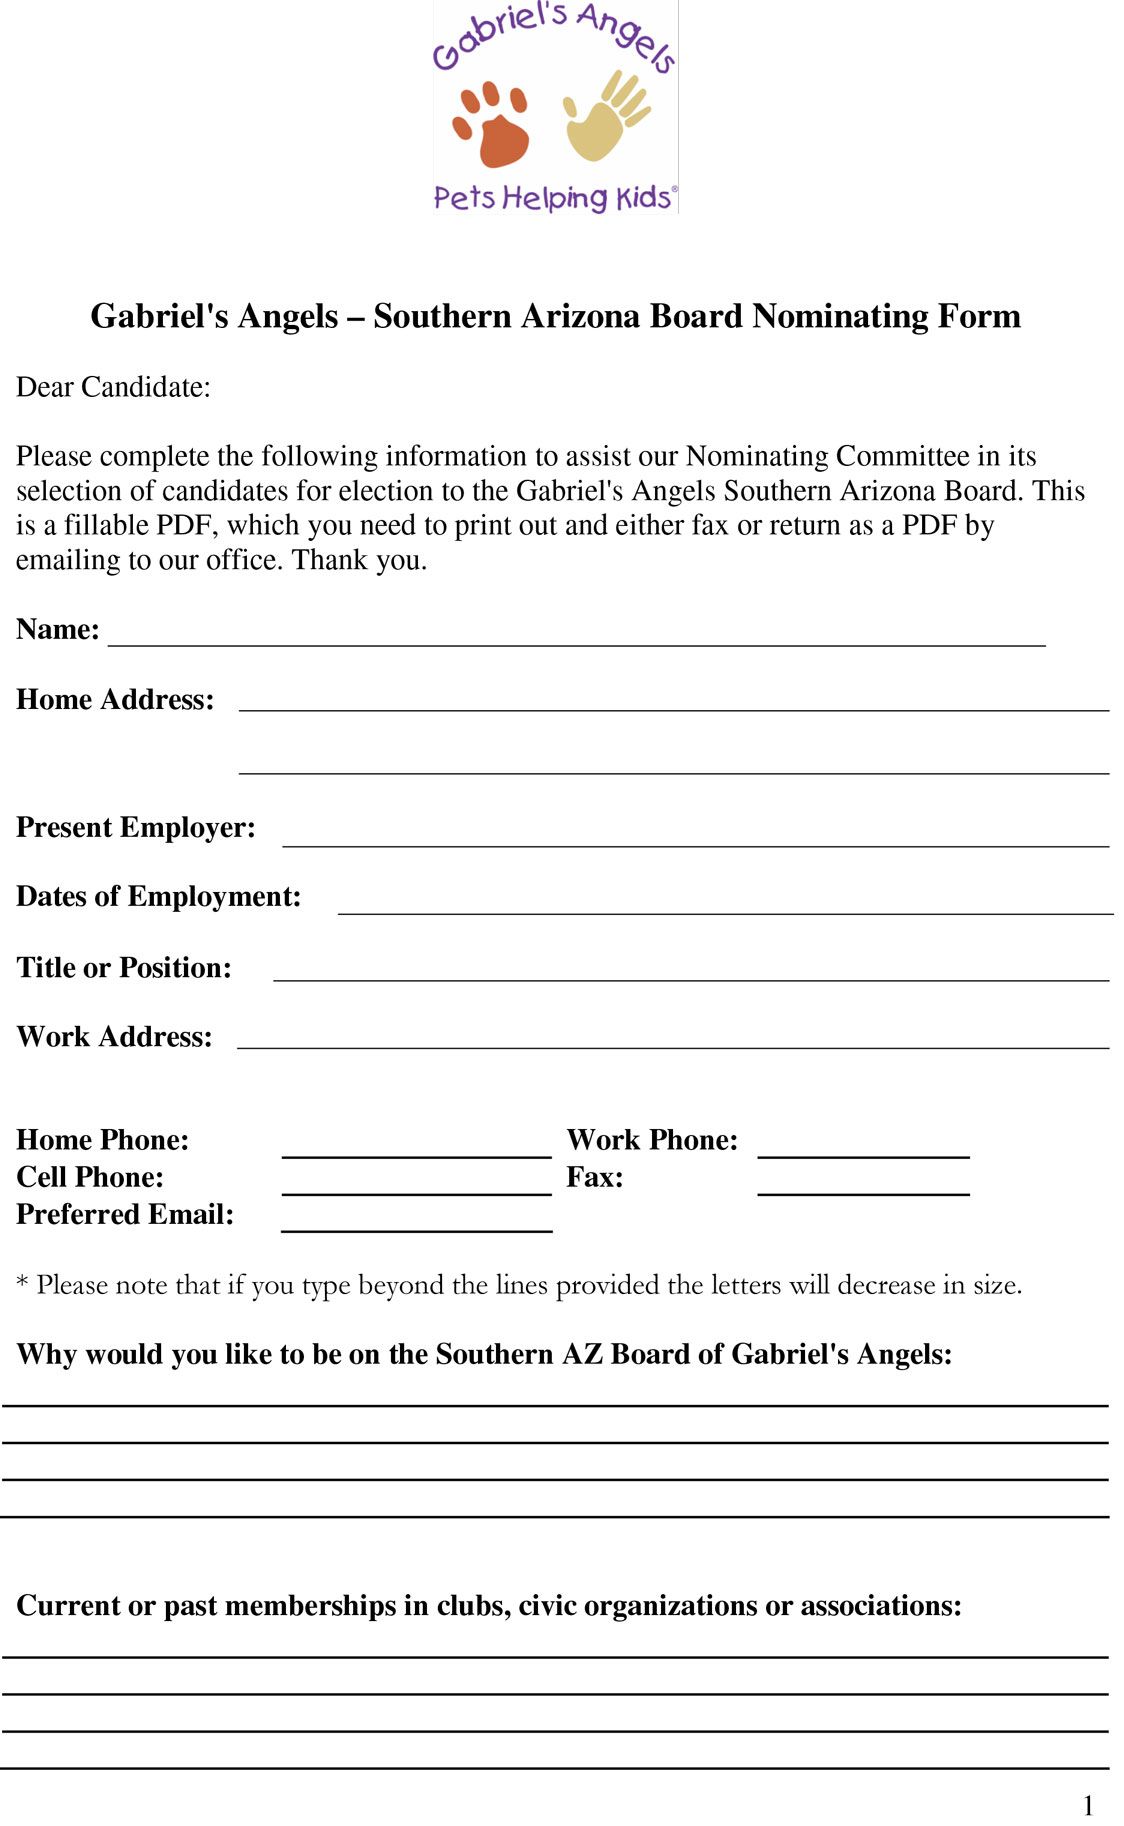 Gabriel's Angels Southern Arizona Board Application Form